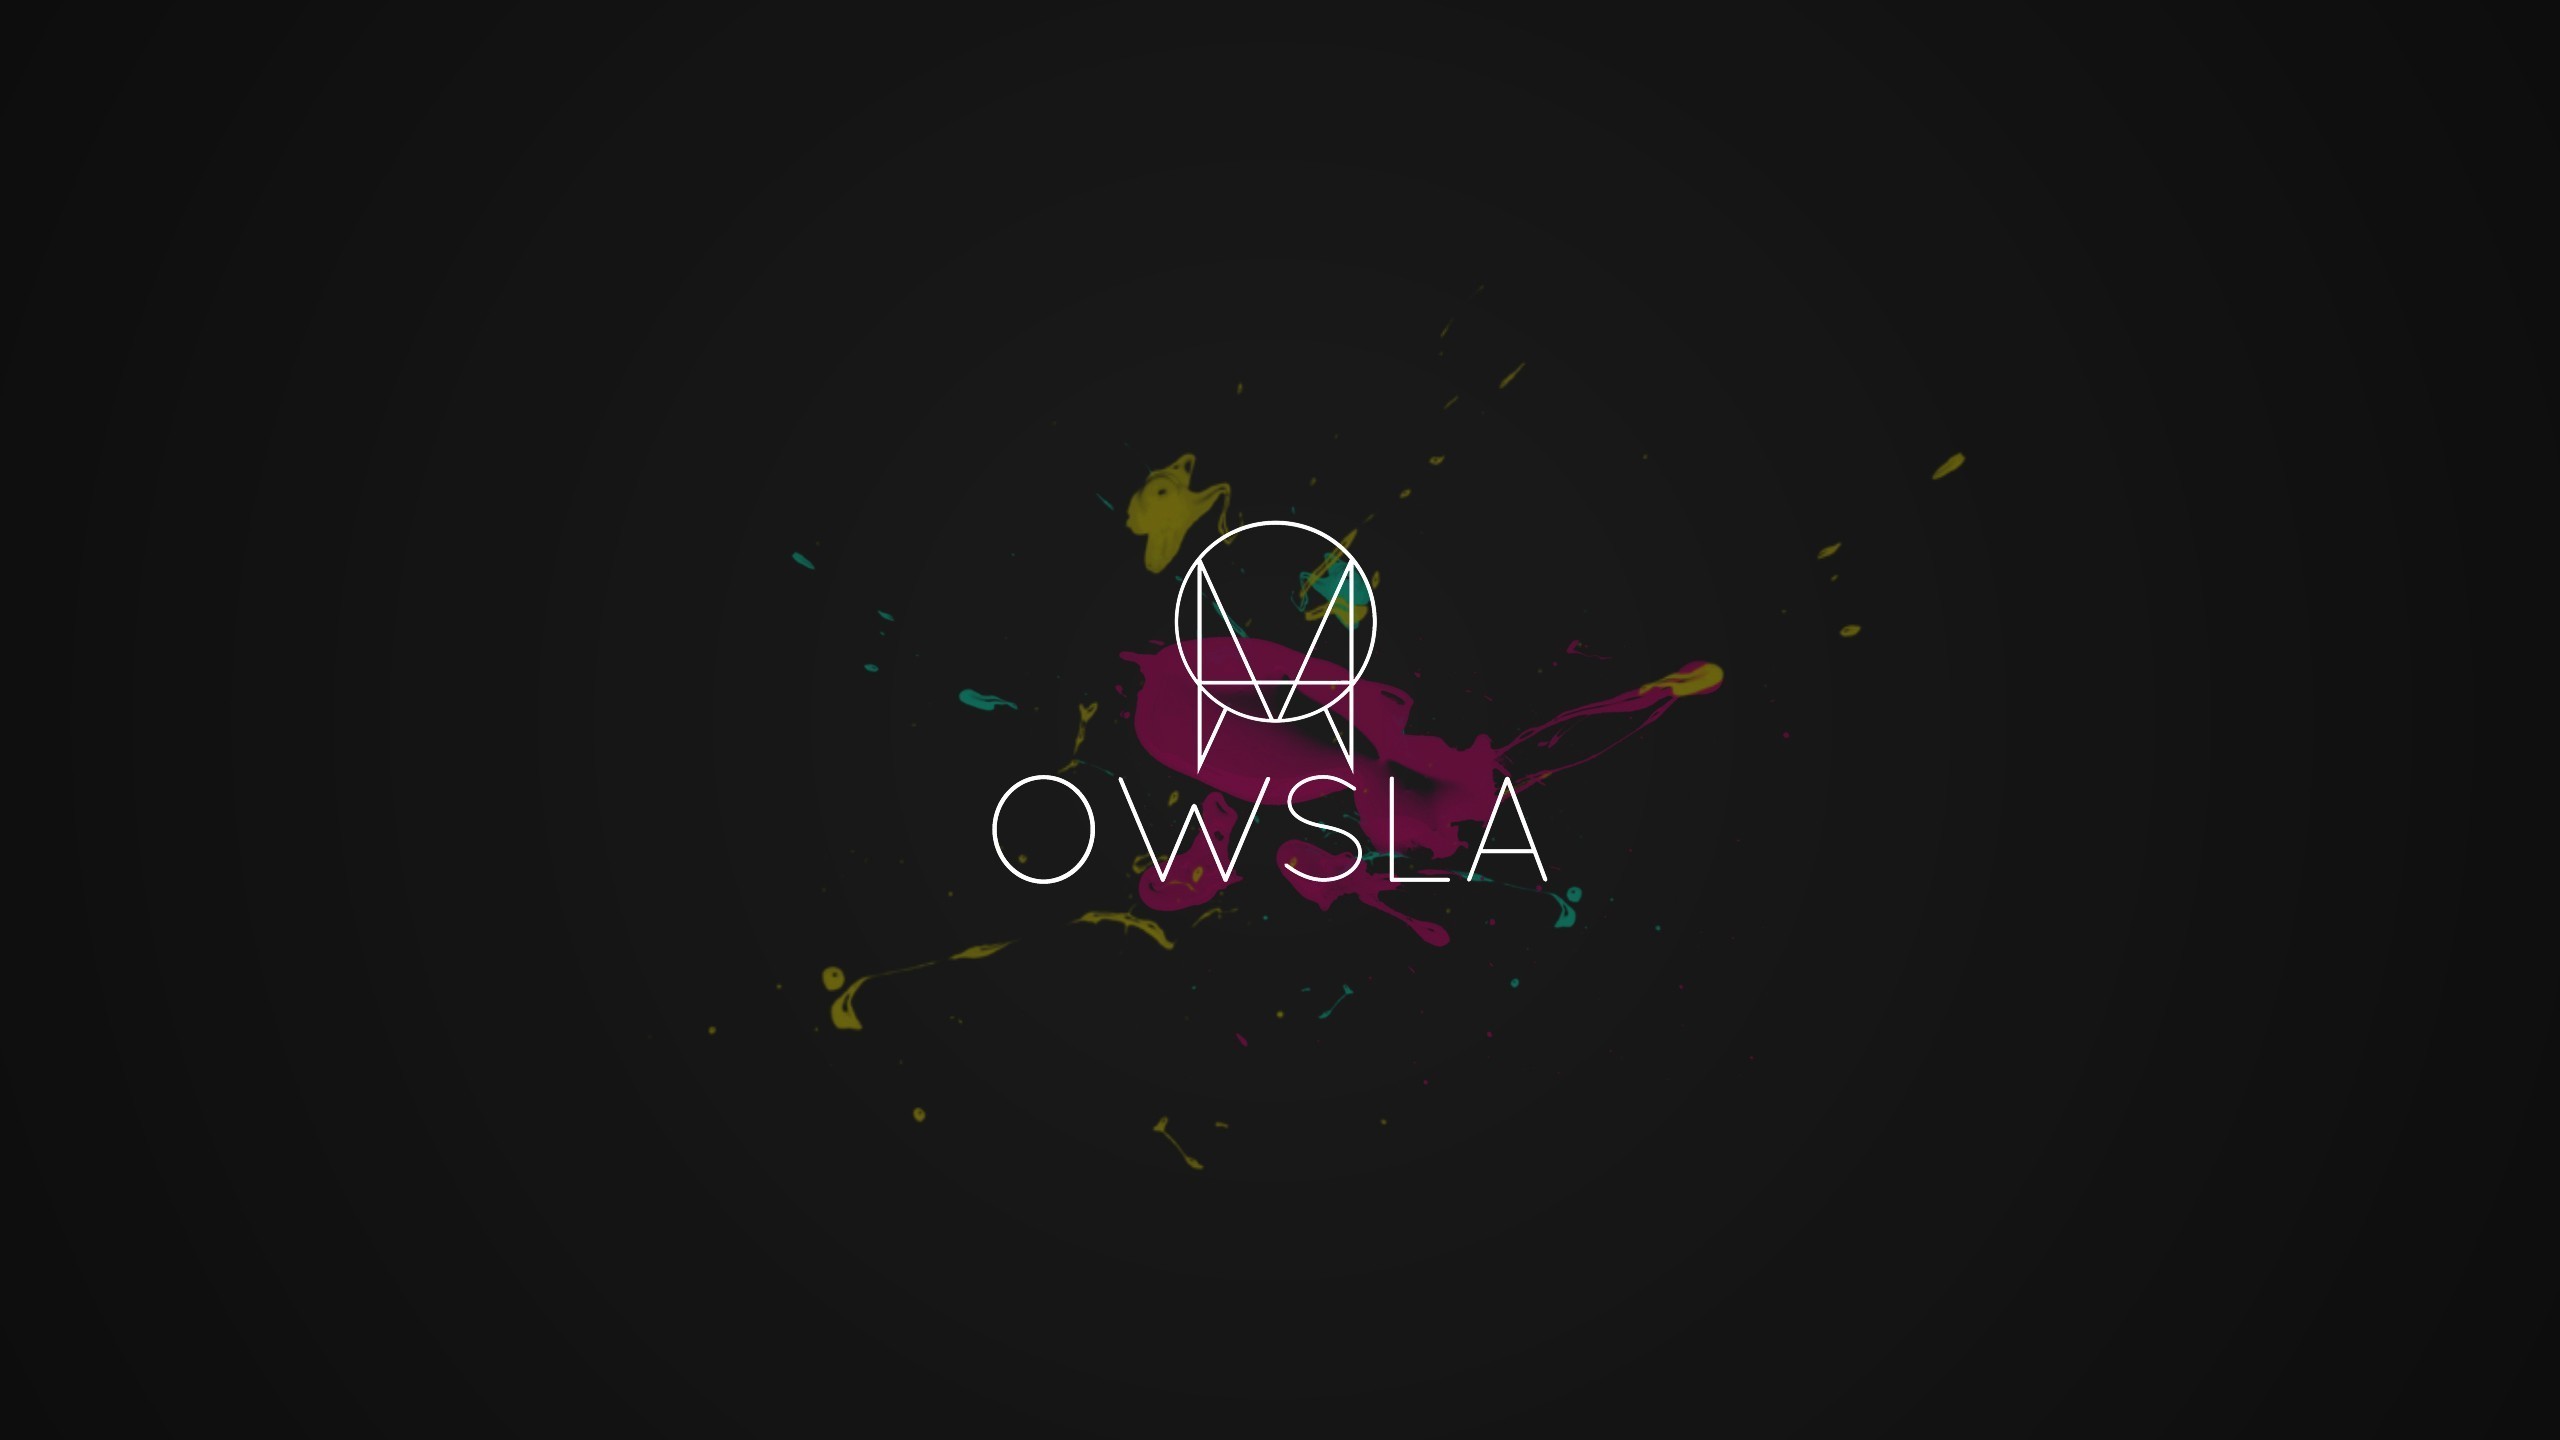 Owsla Wallpaper Image